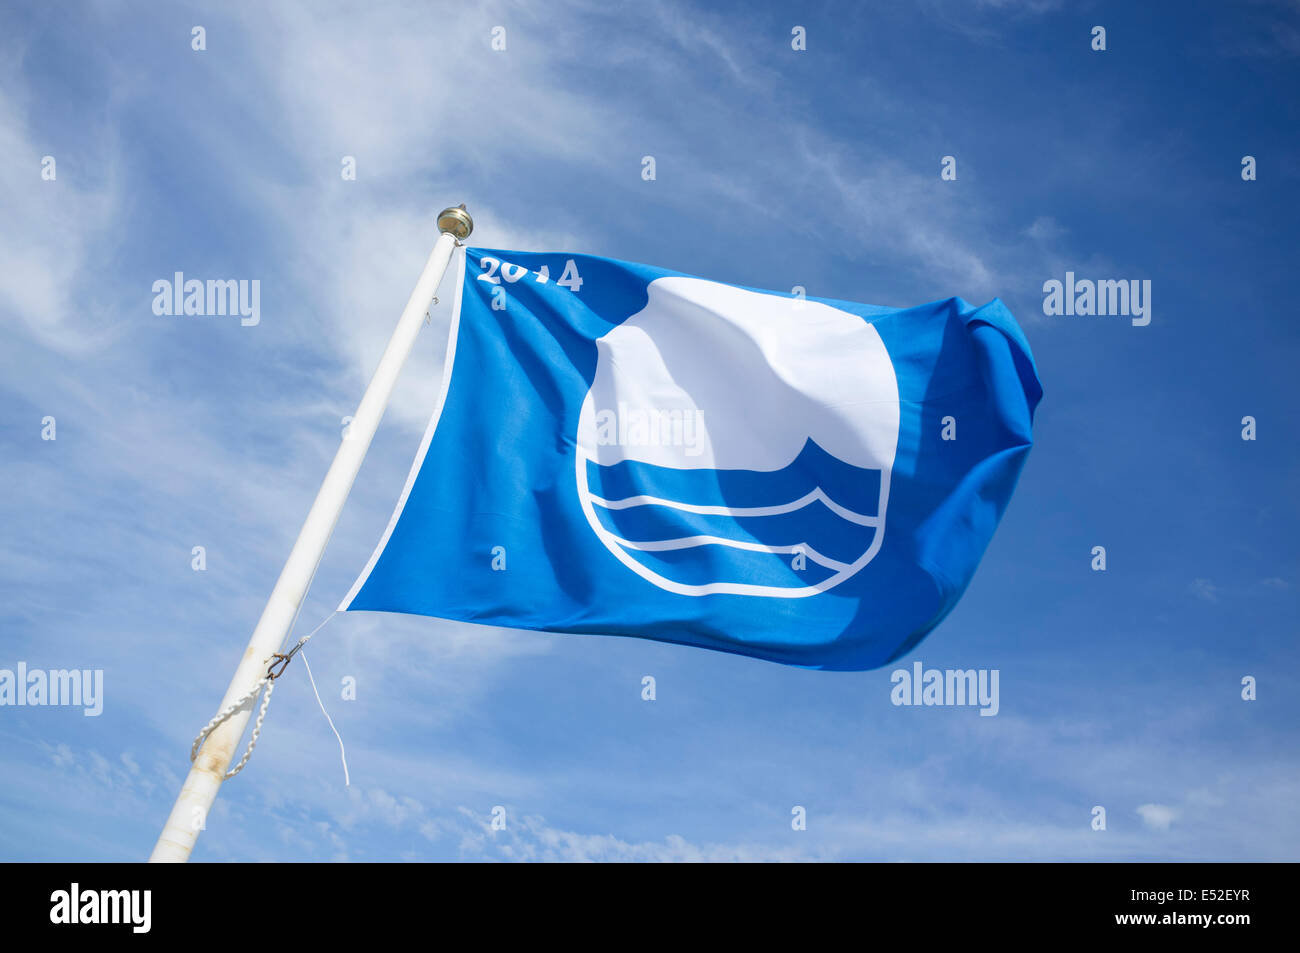 Spiaggia Bandiera Blu pennone Foto Stock